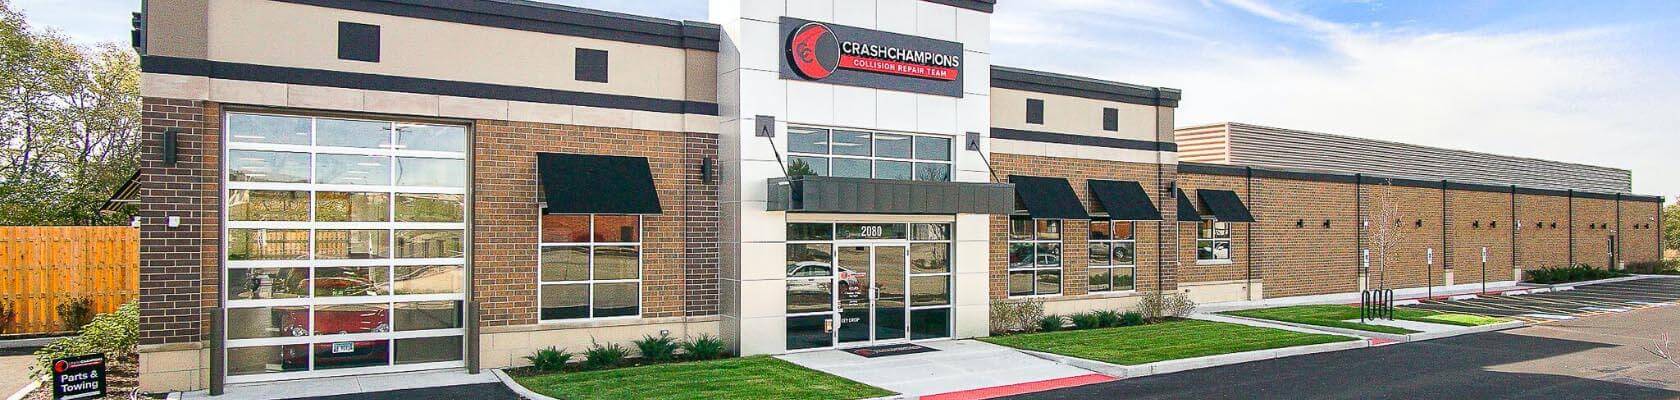 Crash Champions Collision Repair - Auto Body Shop in Beltsville